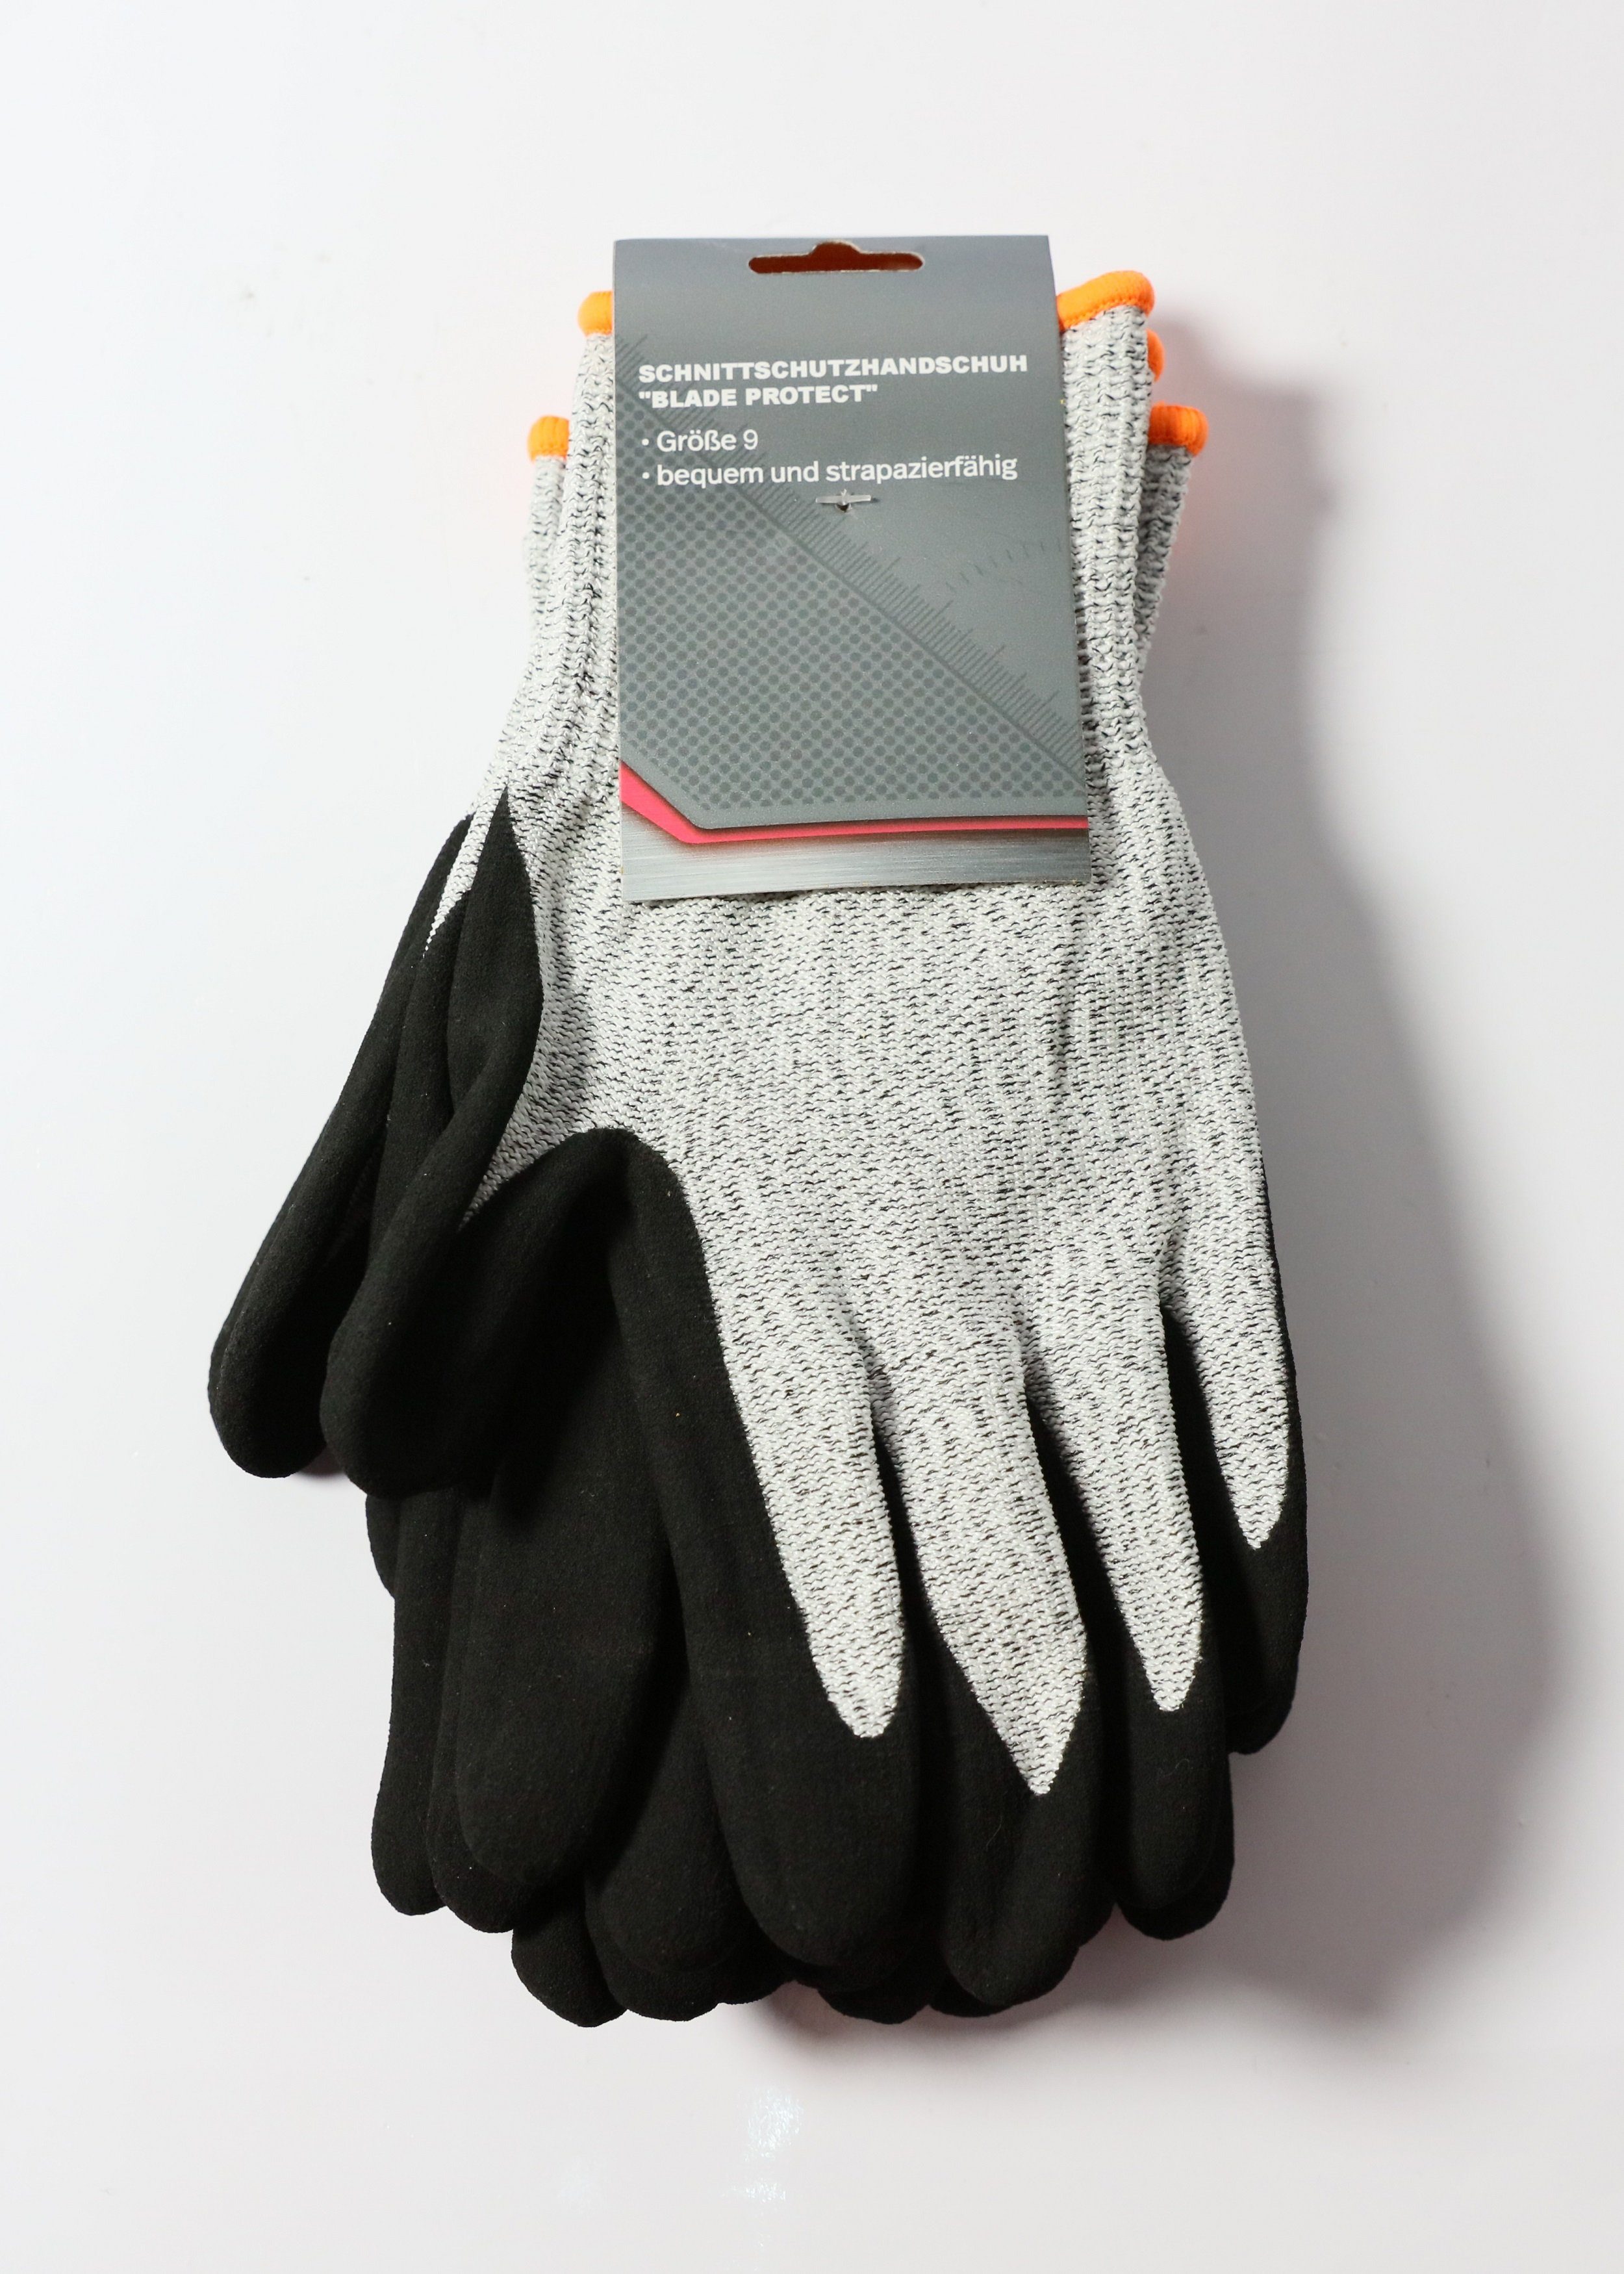 TECH-CRAFT Schnittschutzhandschuhe Schnittschutzhandschuh (3er 3 Paar Touchscreen-Finger Gr. Protect Set) Blade 9